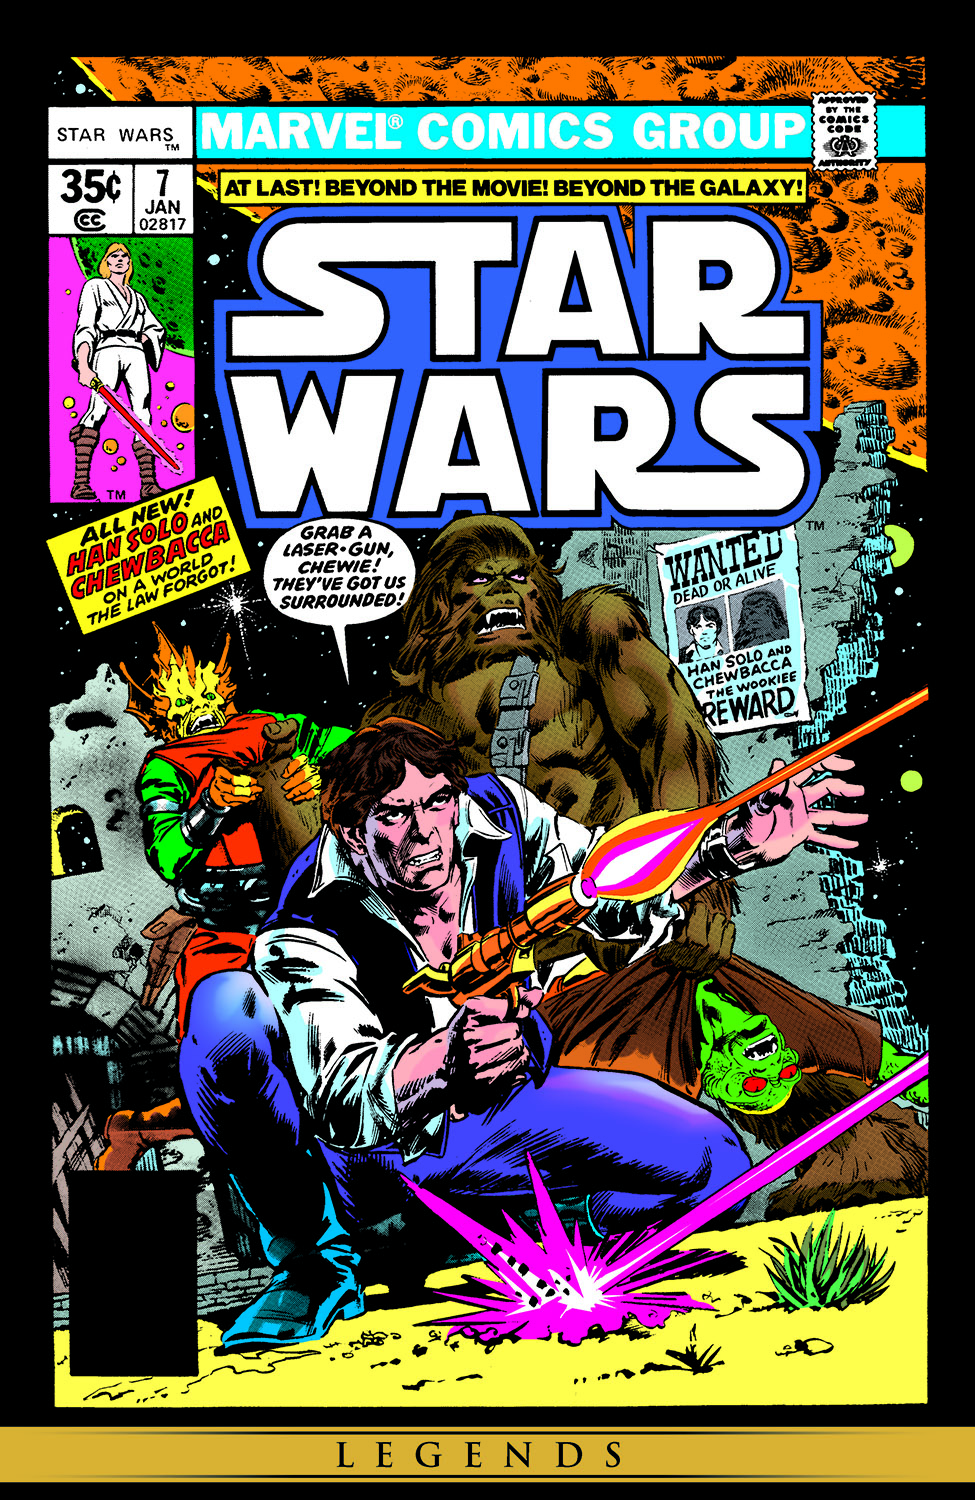 Star wars comic book 1977